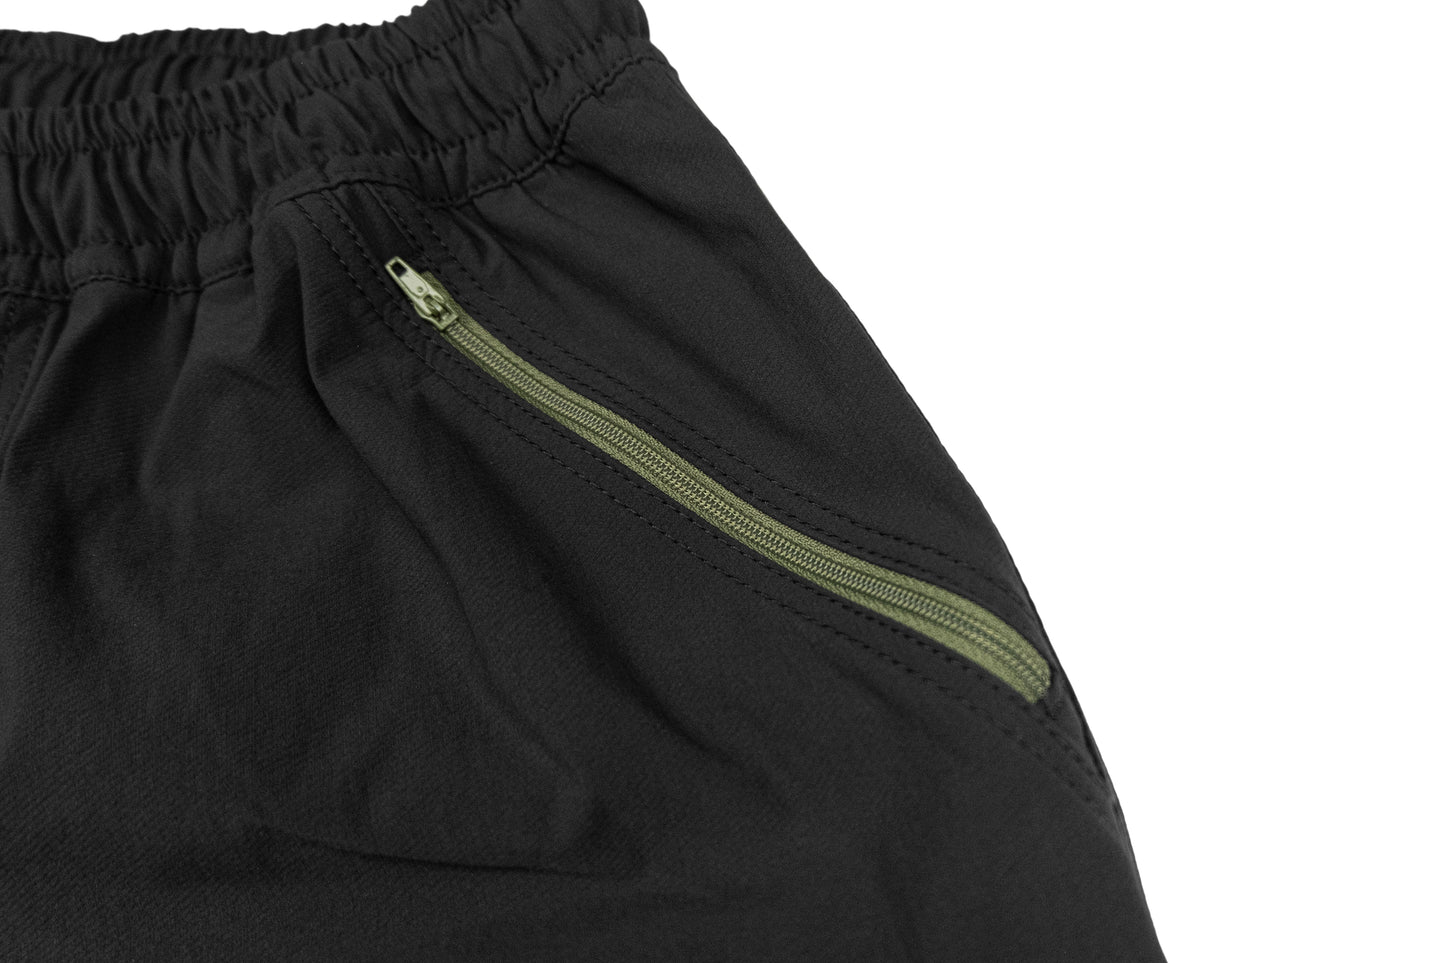 GW Trail Shorts (Black)